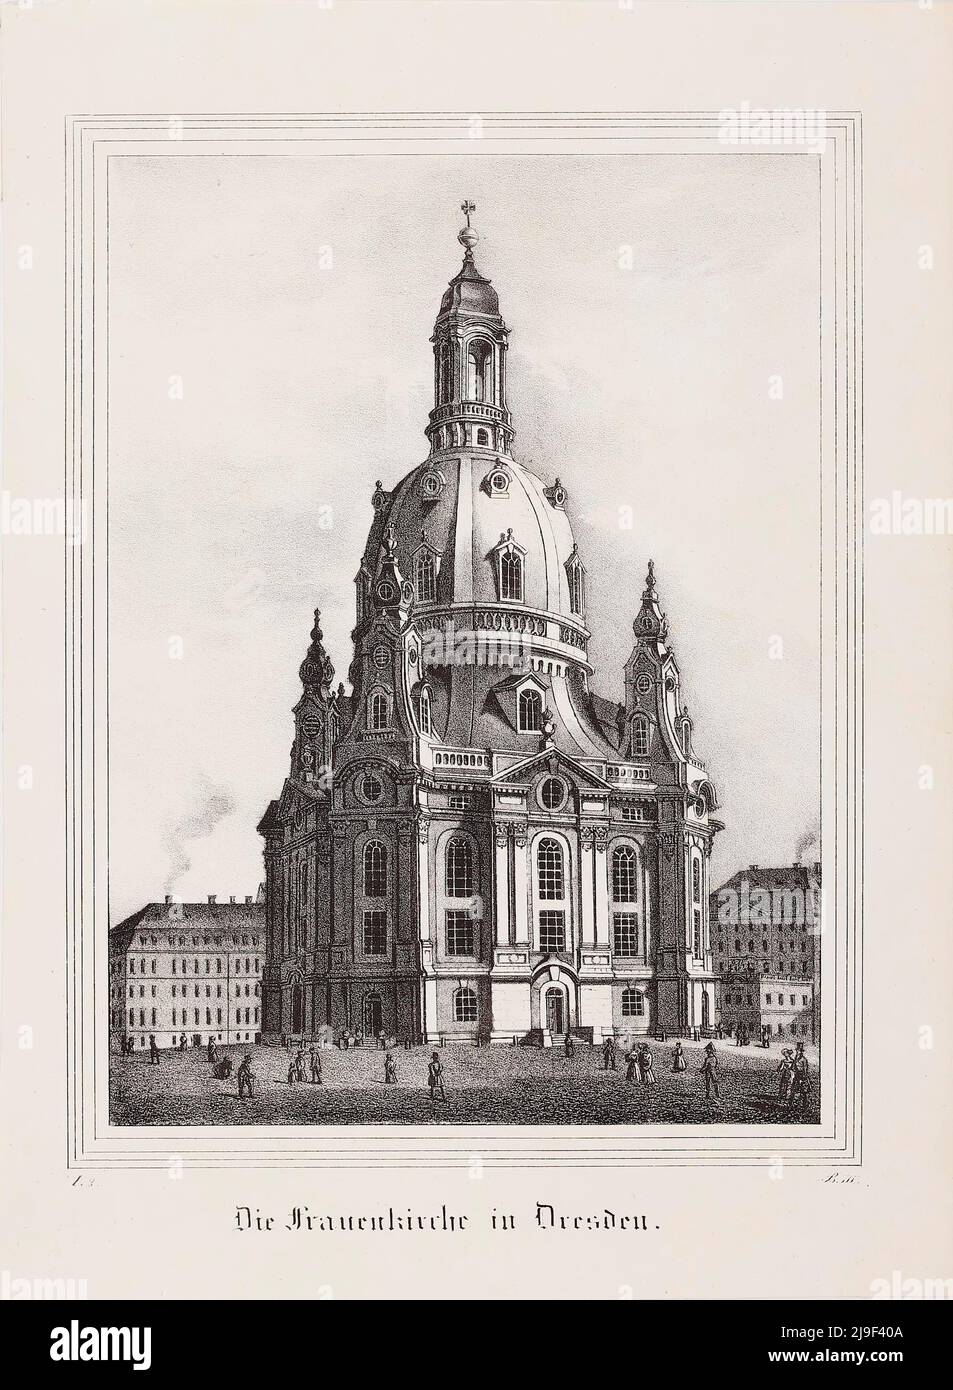 Incisione del 19th secolo di Dresda Frauenkirche. La Frauenkirche di Dresda (in tedesco: Dresdner Frauenkirche, Chiesa di nostra Signora) è una chiesa luterana situata in Foto Stock